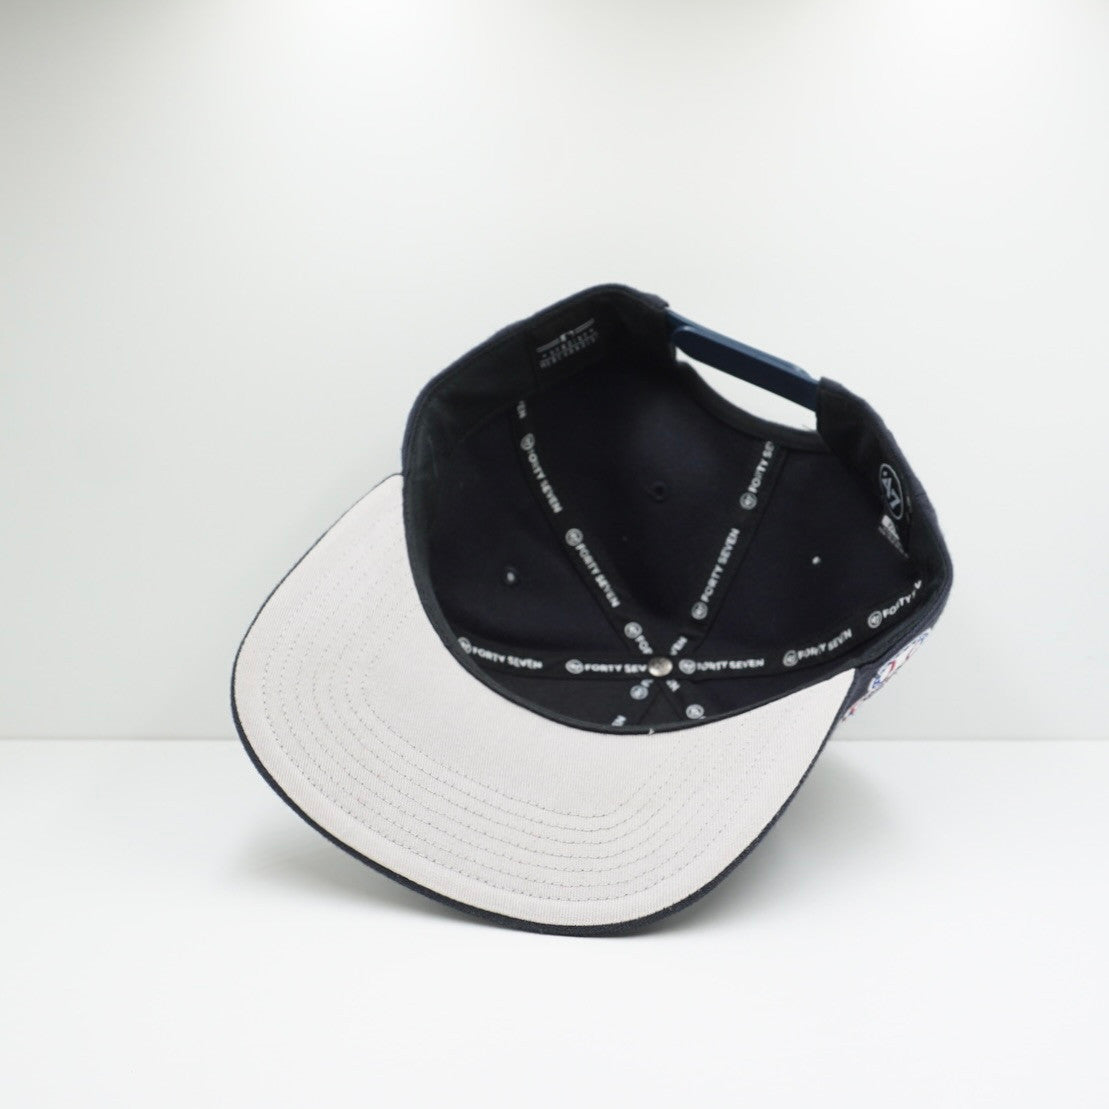 47 Brand New York Yankees Snapback Cap